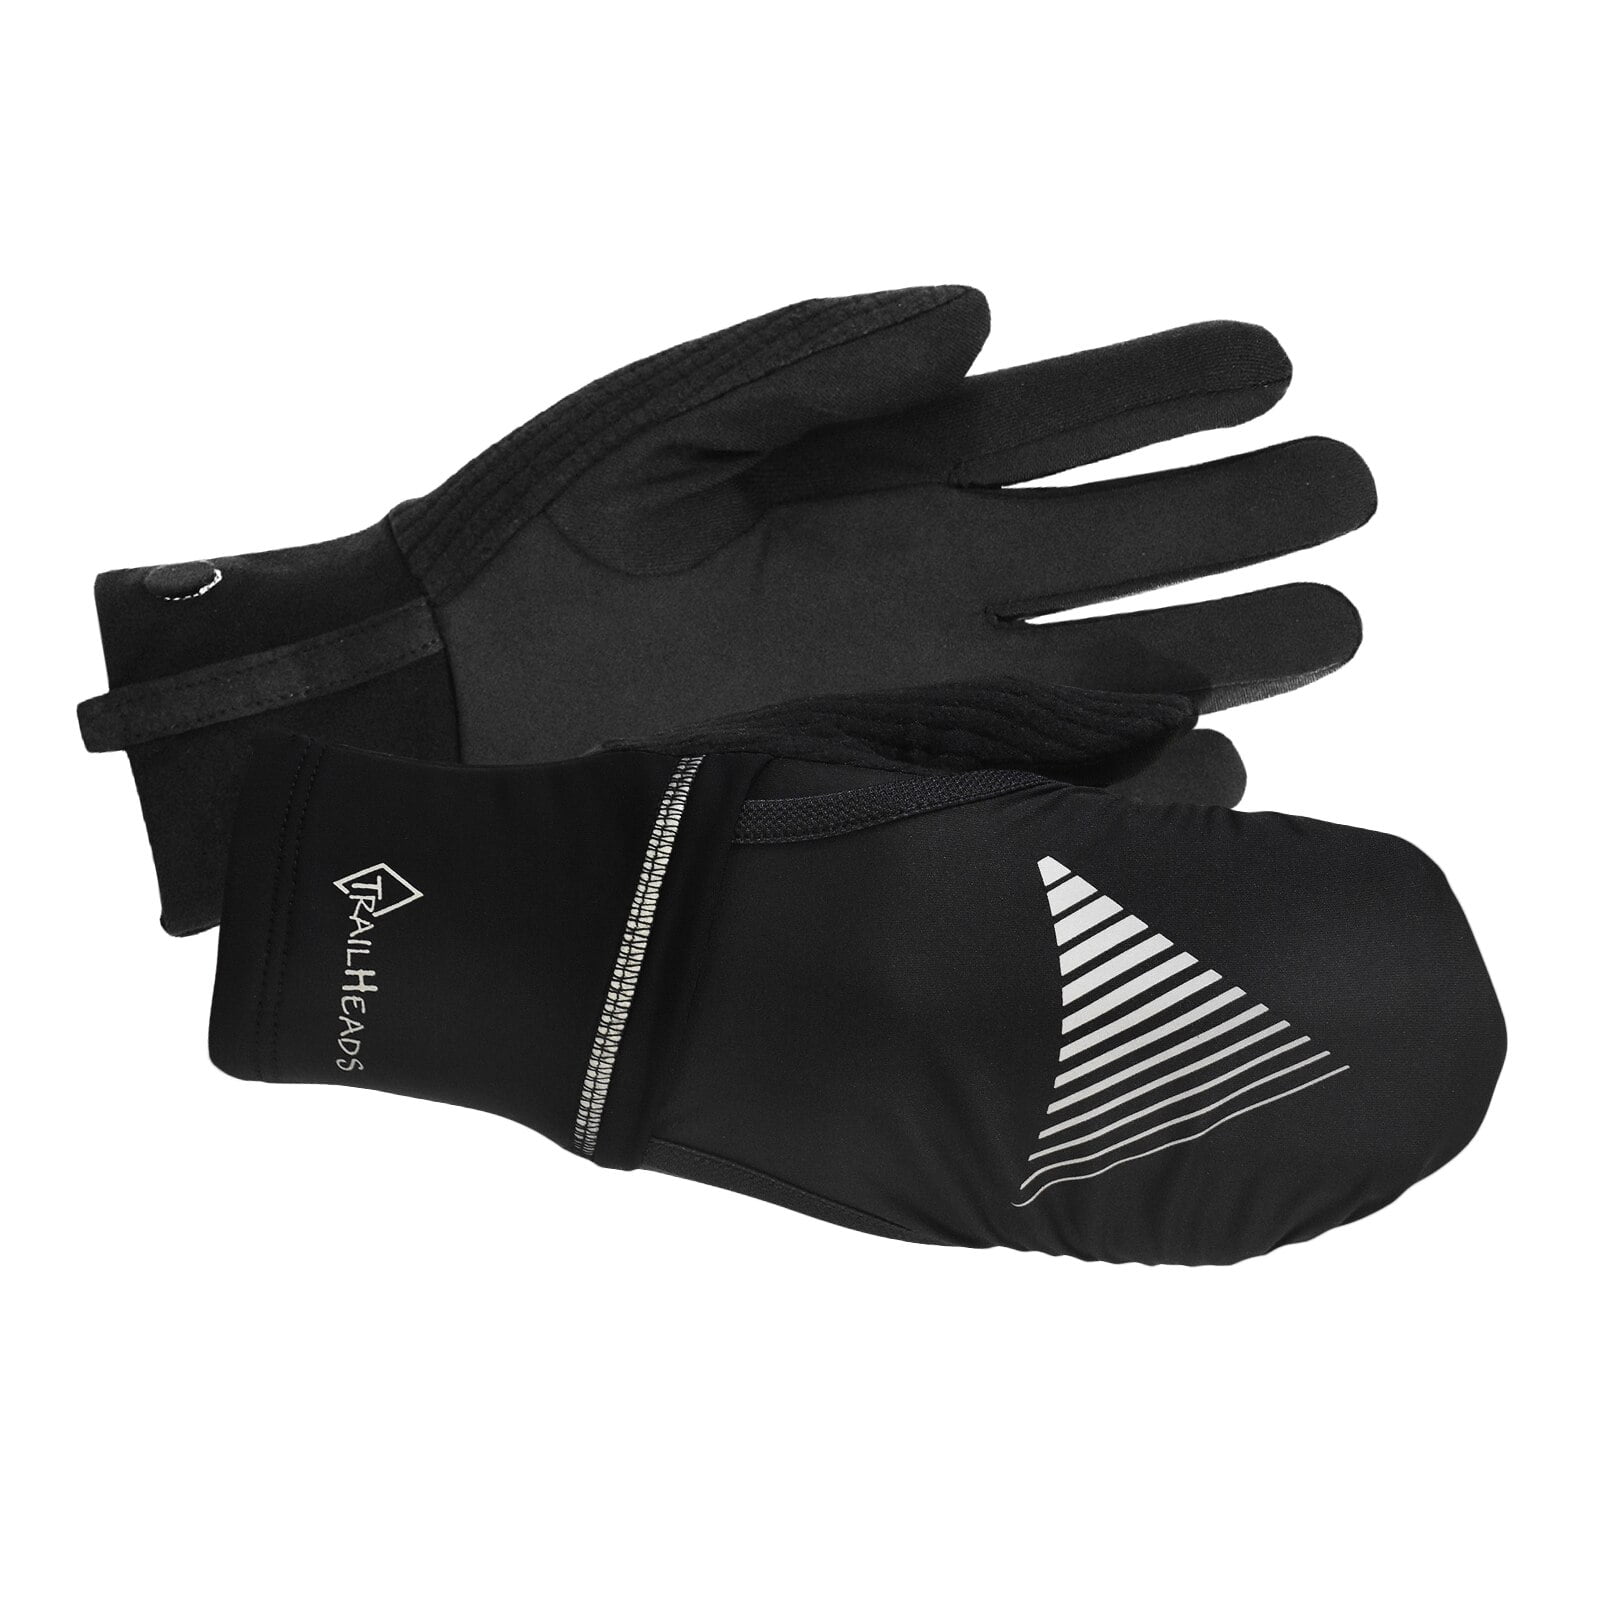 Details about   NWT New RBX Unisex Black Ultra Fit Touchscreen Lightweight Running Gloves 